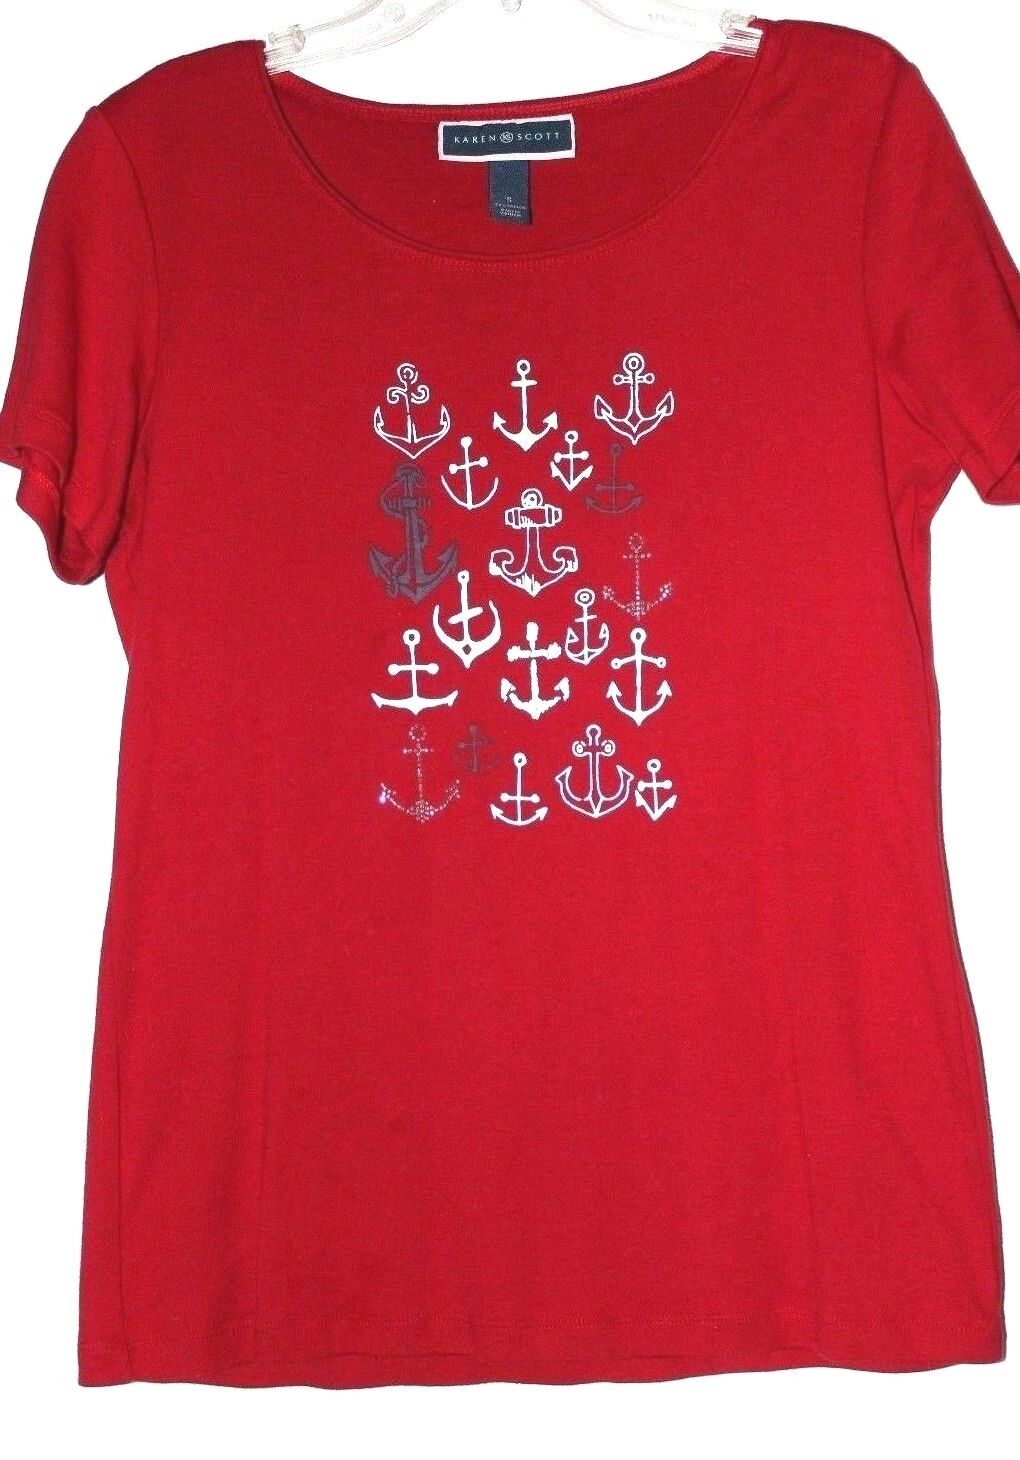 Karen Scott womens CRUISE WEAR Nautical Shirt BLING ANCHOR top Womens Small